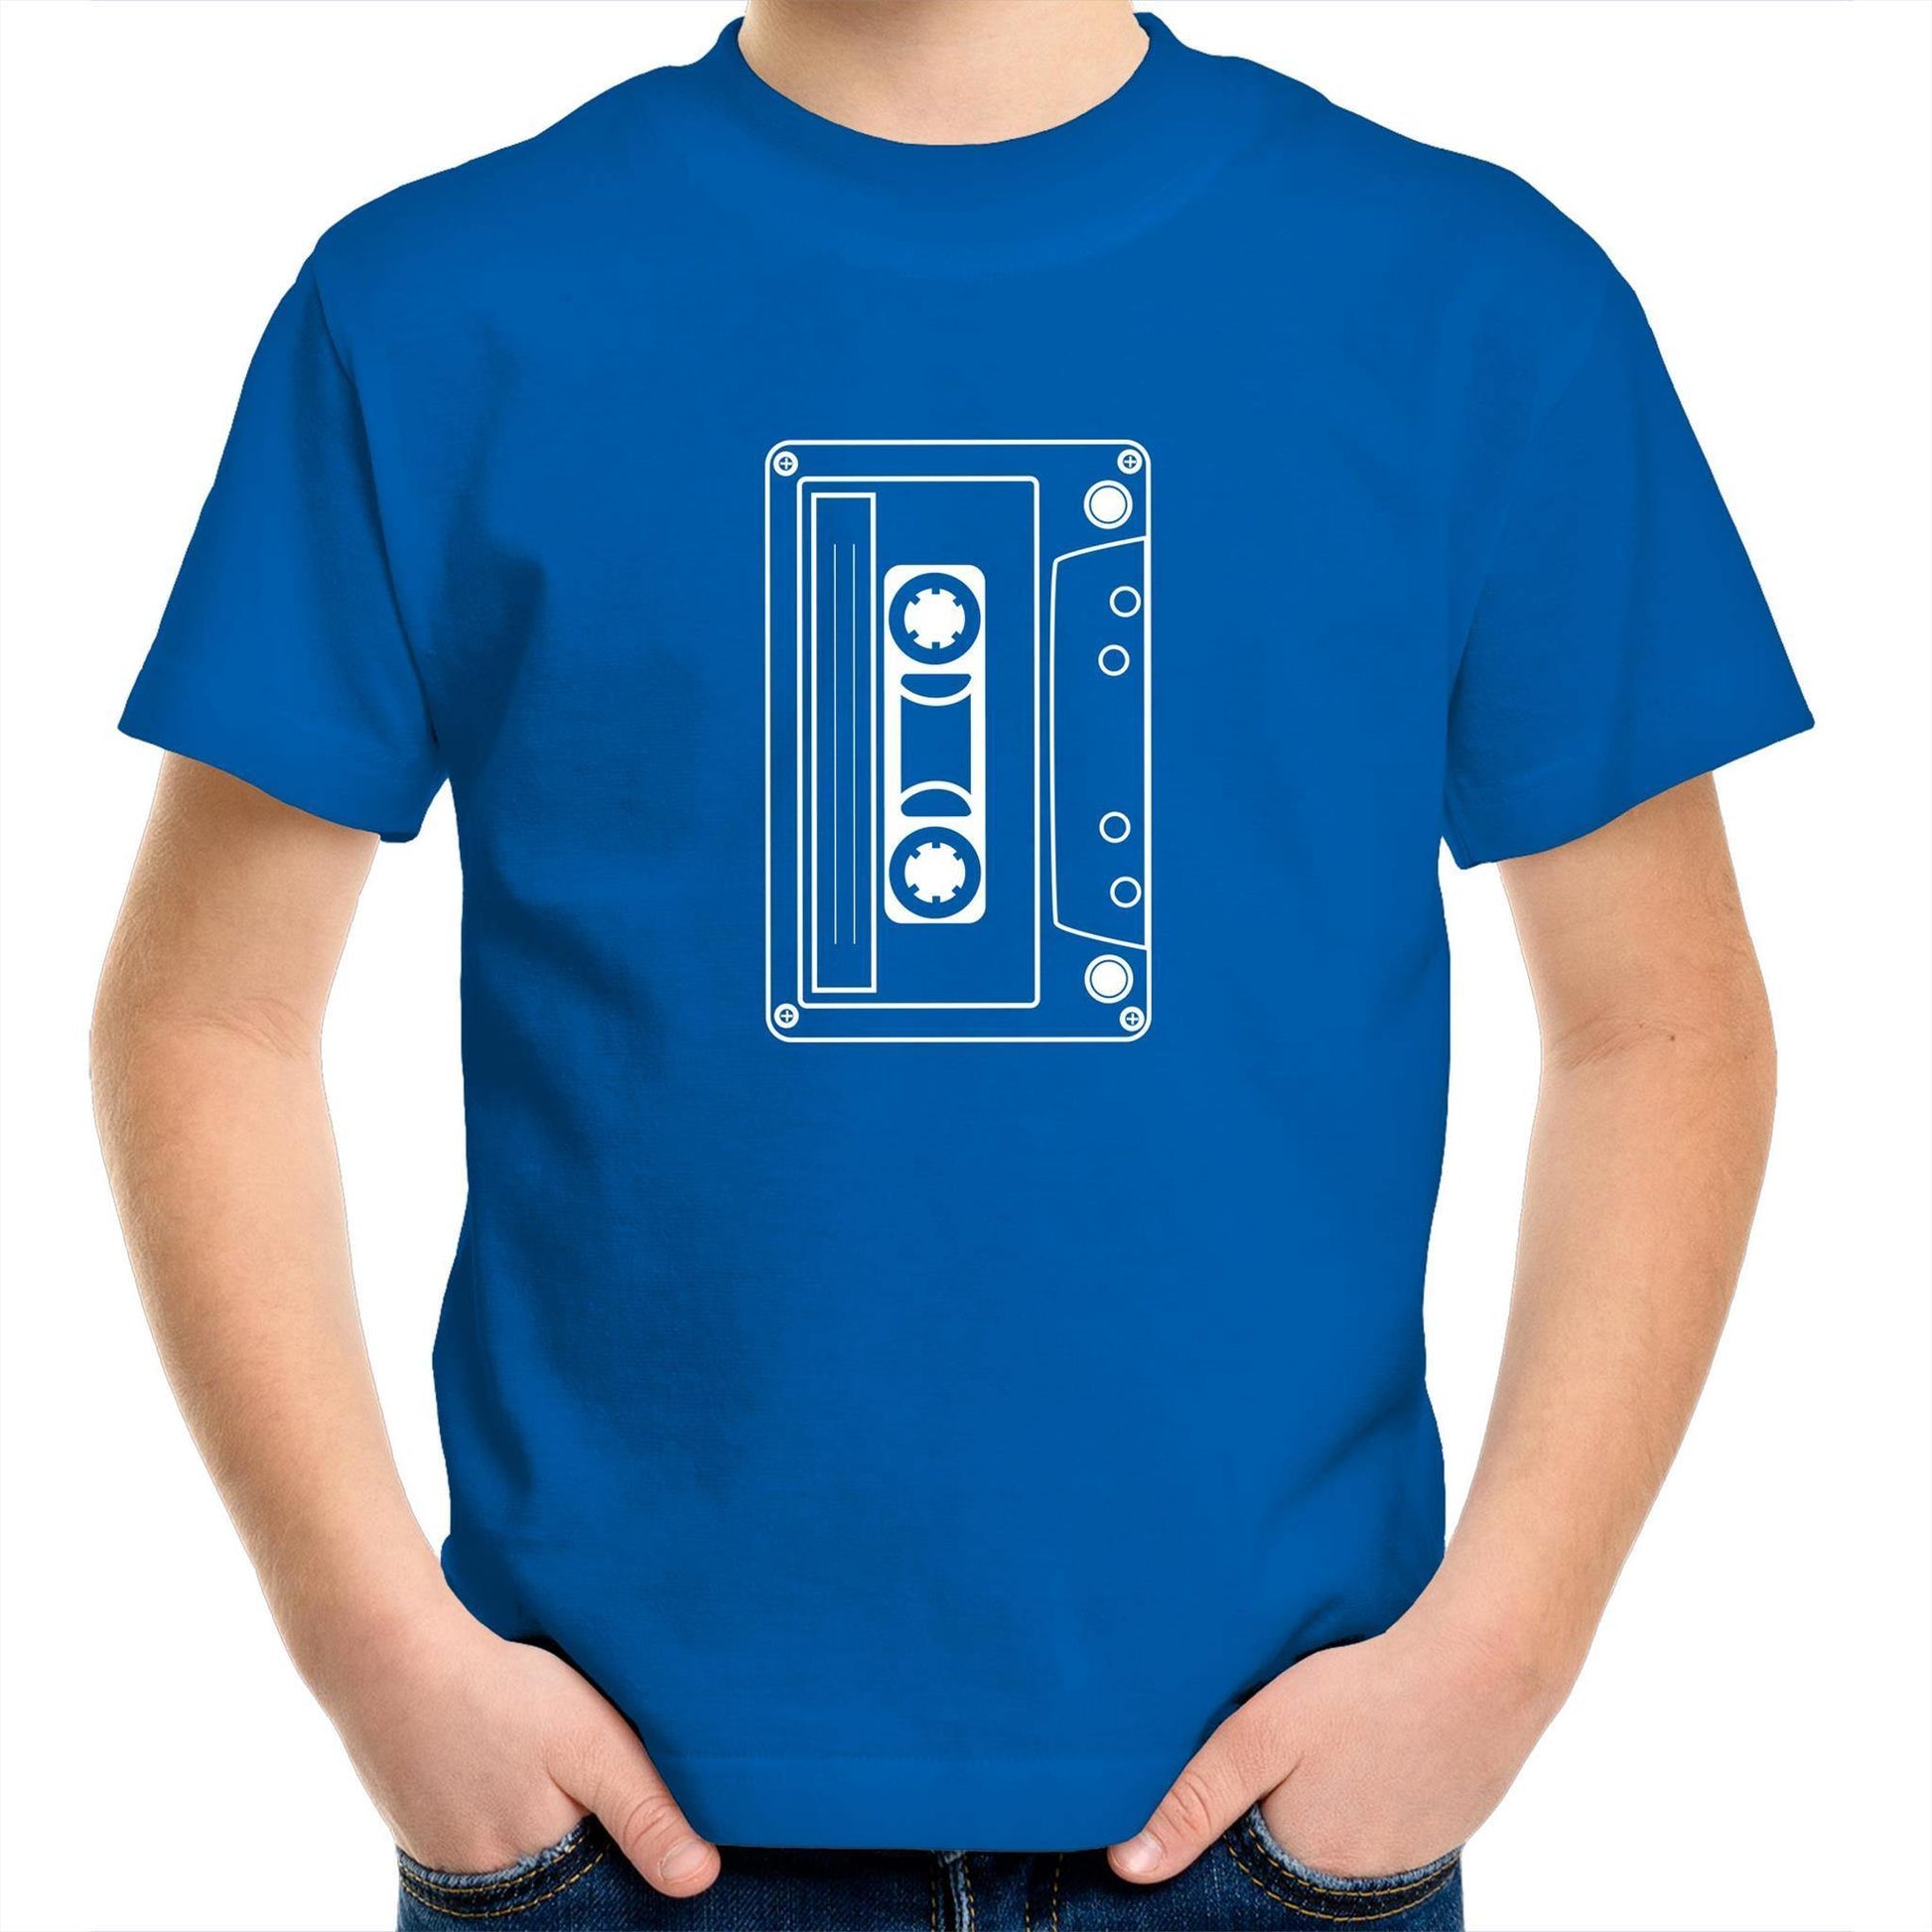 Cassette - Kids Youth Crew T-Shirt Bright Royal Kids Youth T-shirt Music Retro